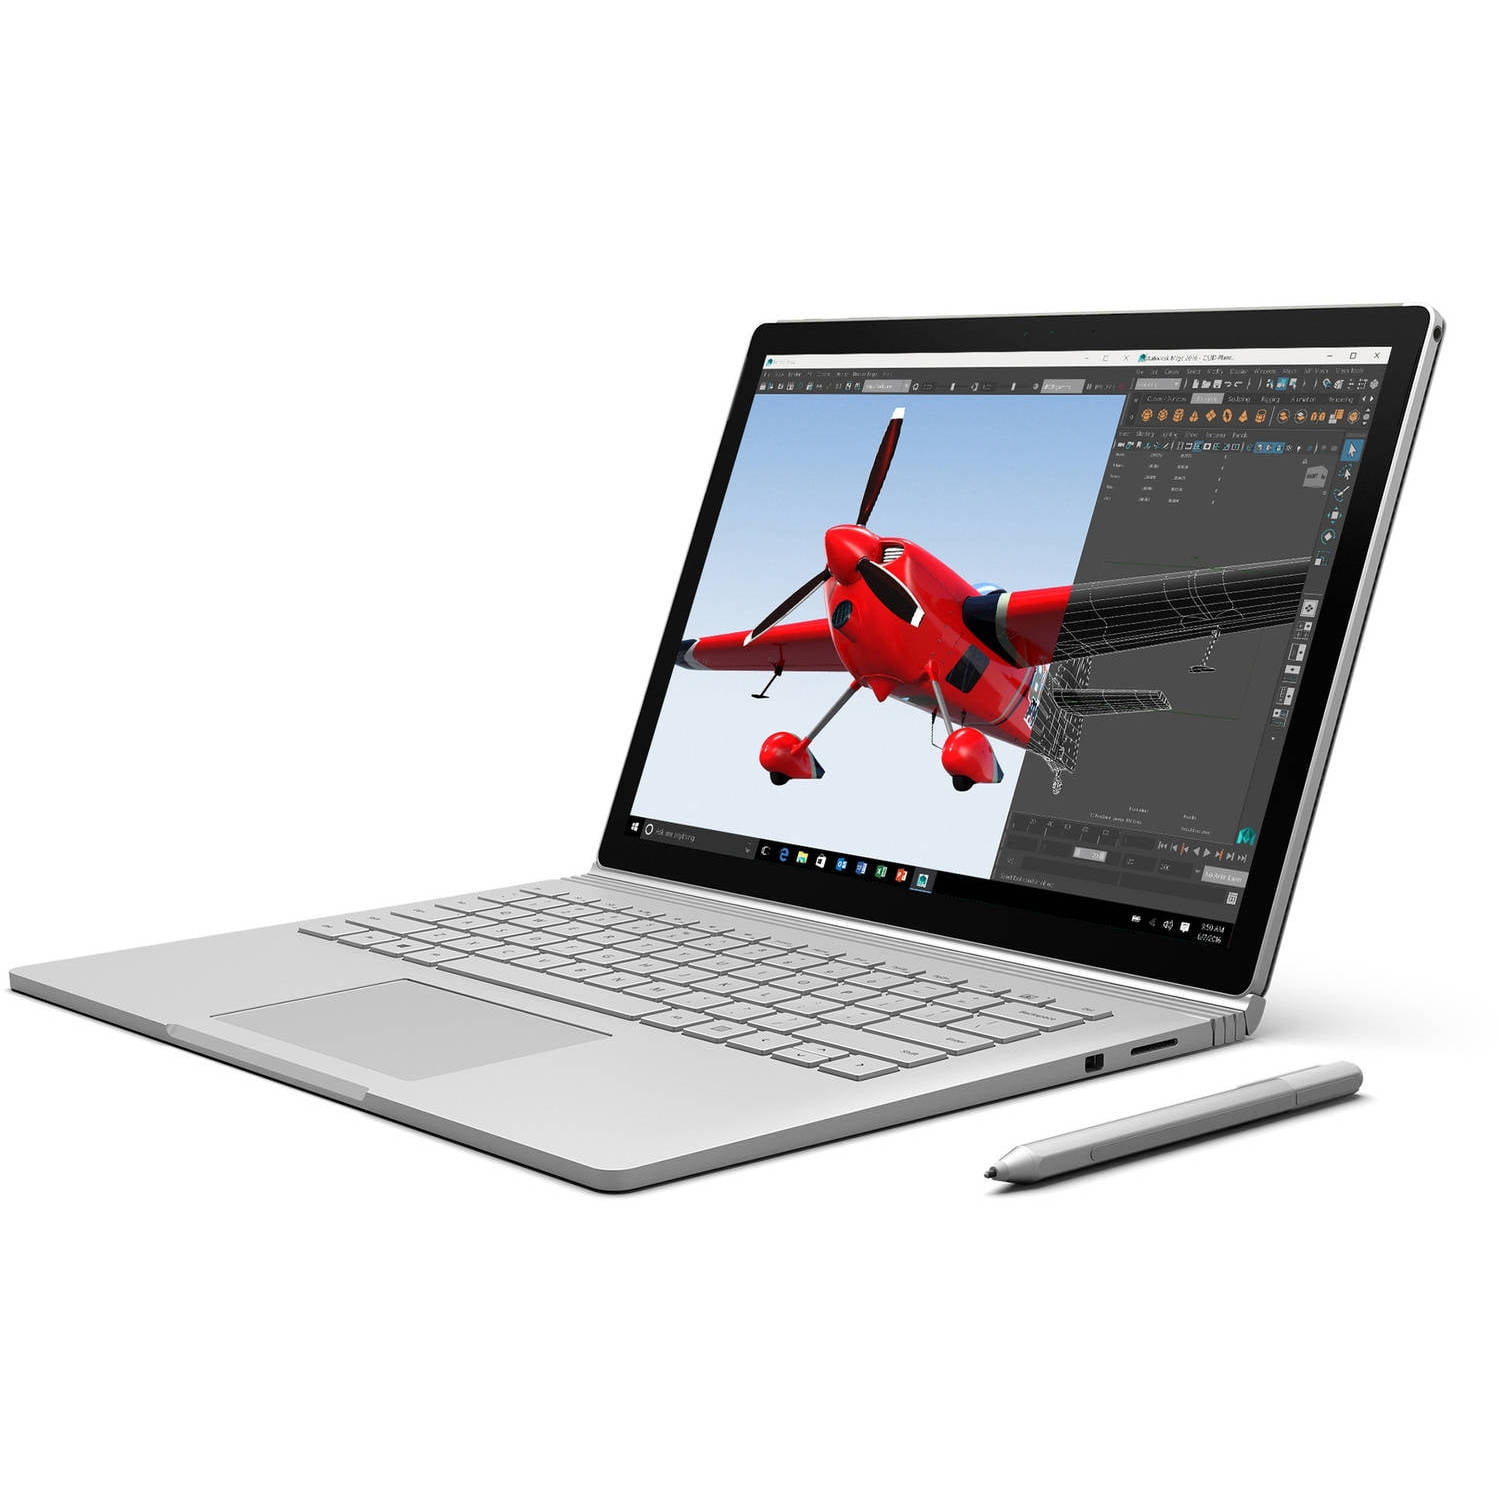 Microsoft Surface Book 13.5